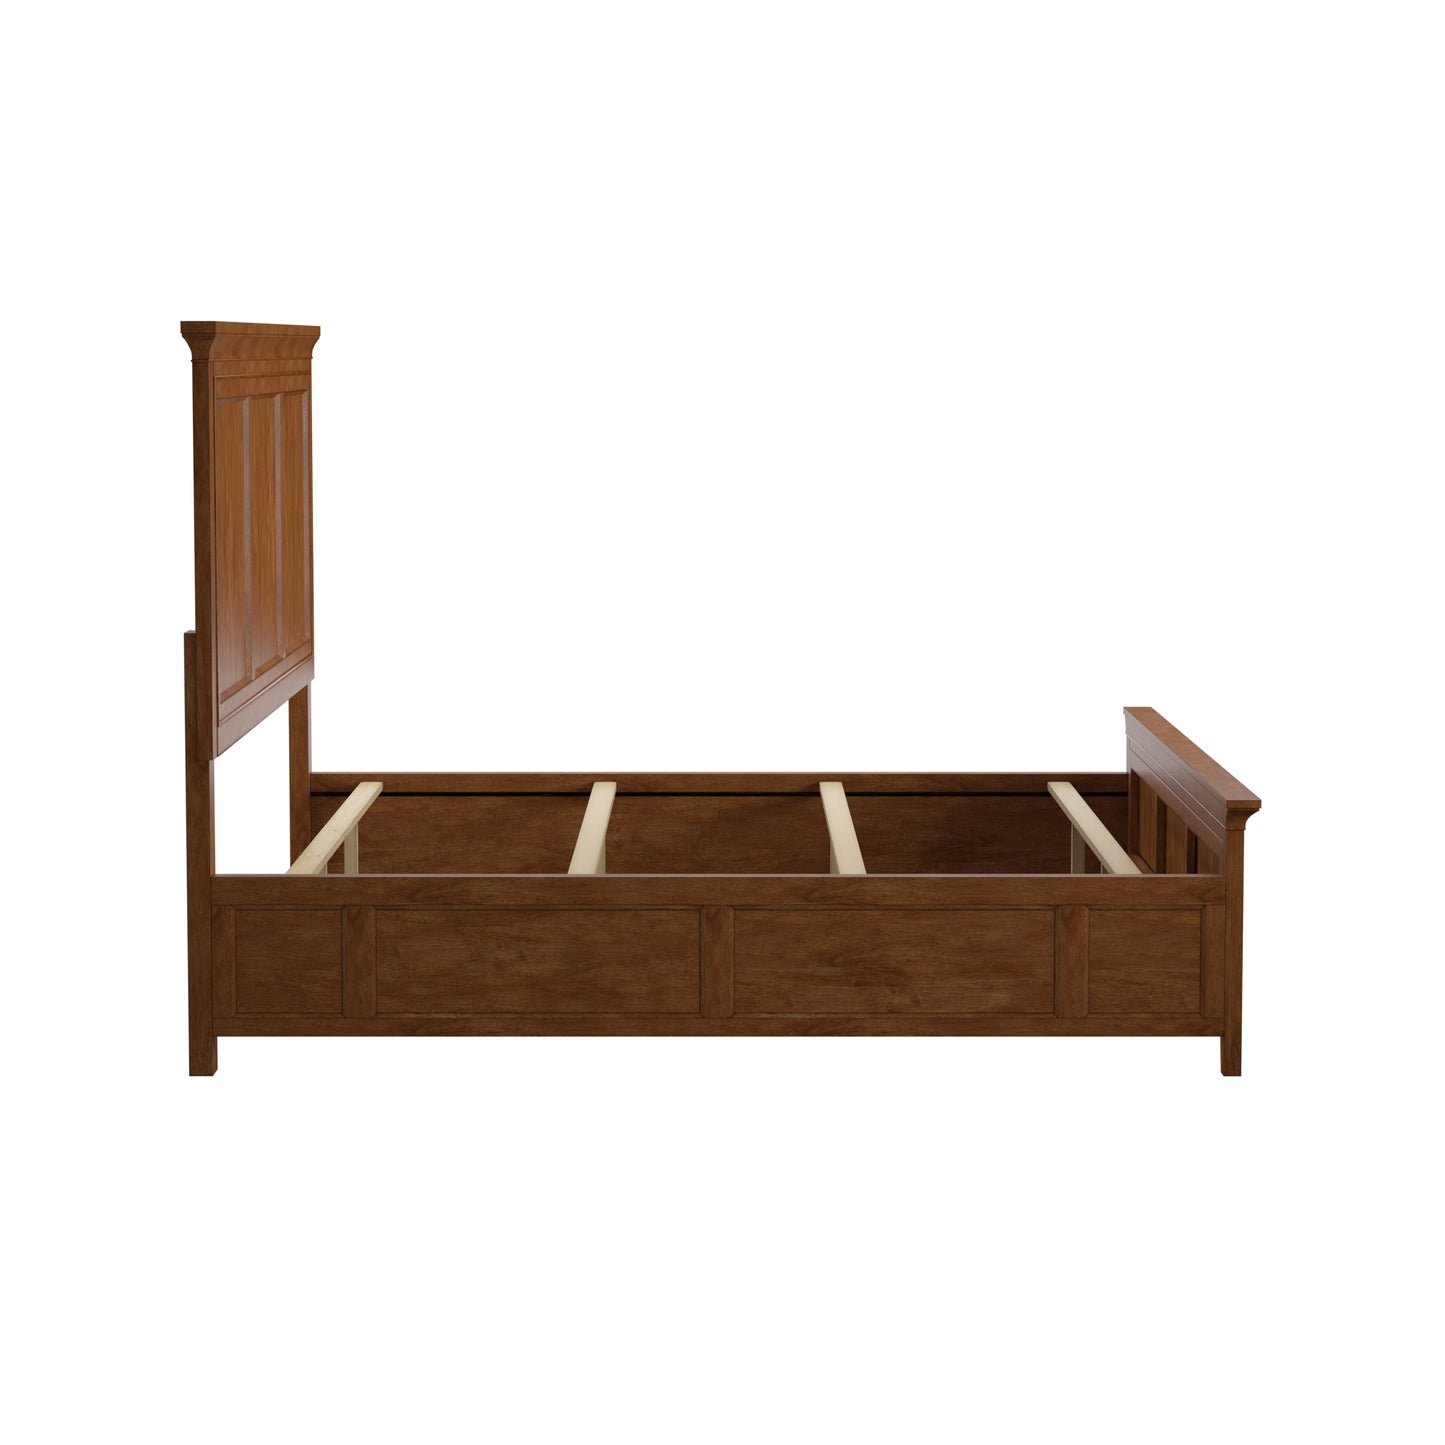 Wood Panel Platform Storage Bed - Oak Finish, 2 Sides of Storage with 4 Drawers, King Size